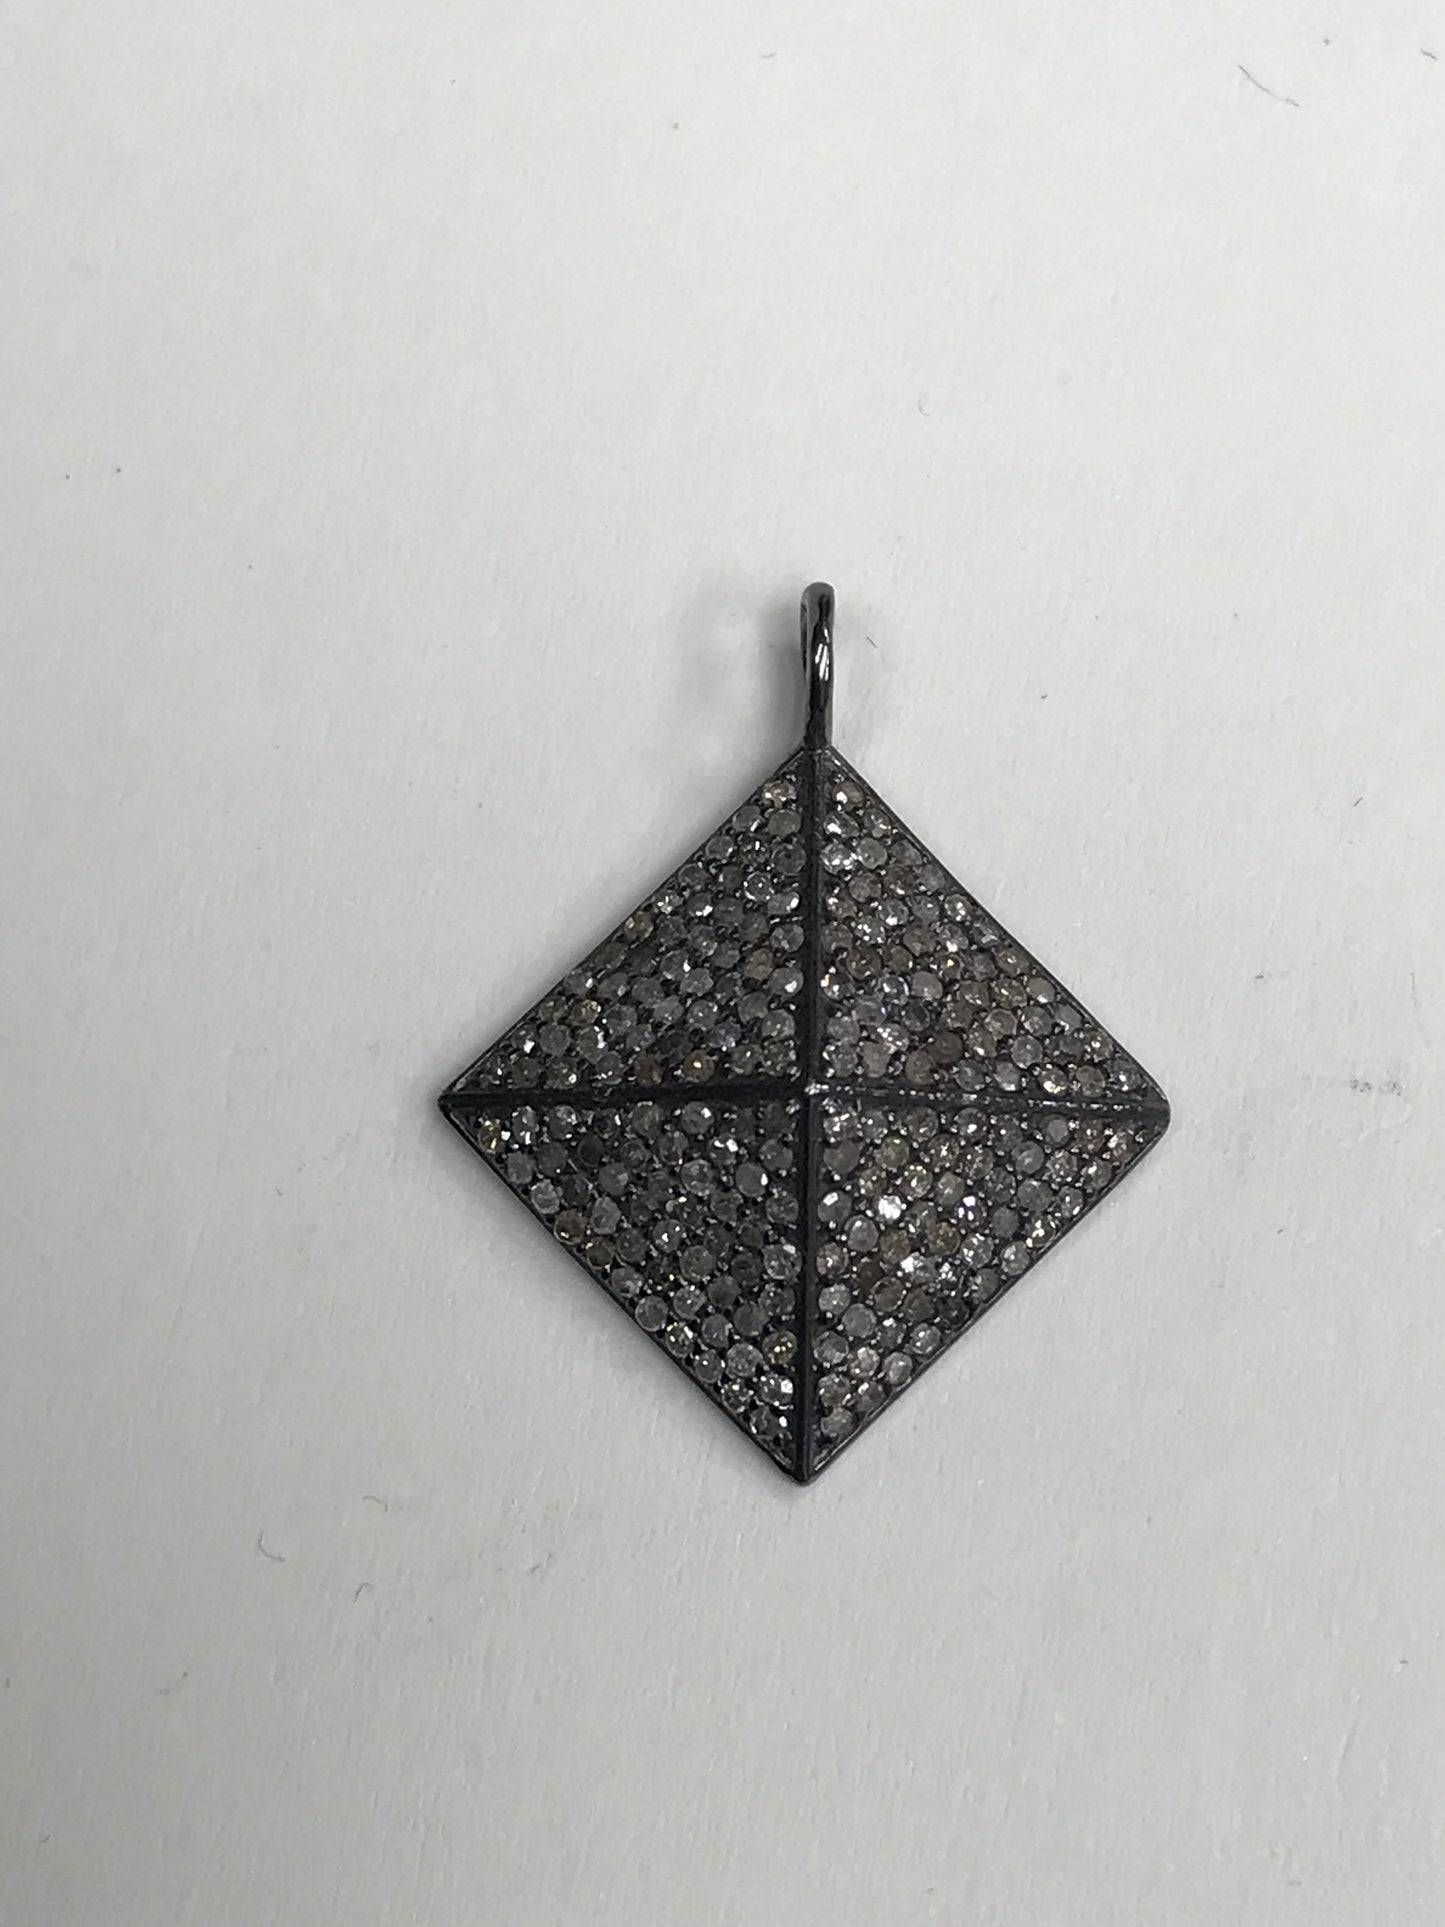 Diamond Pyramid Pendant, Pave Diamond Pendant,Pave Pyramid Necklace, Approx 14 x 14mm. Sterling Silver